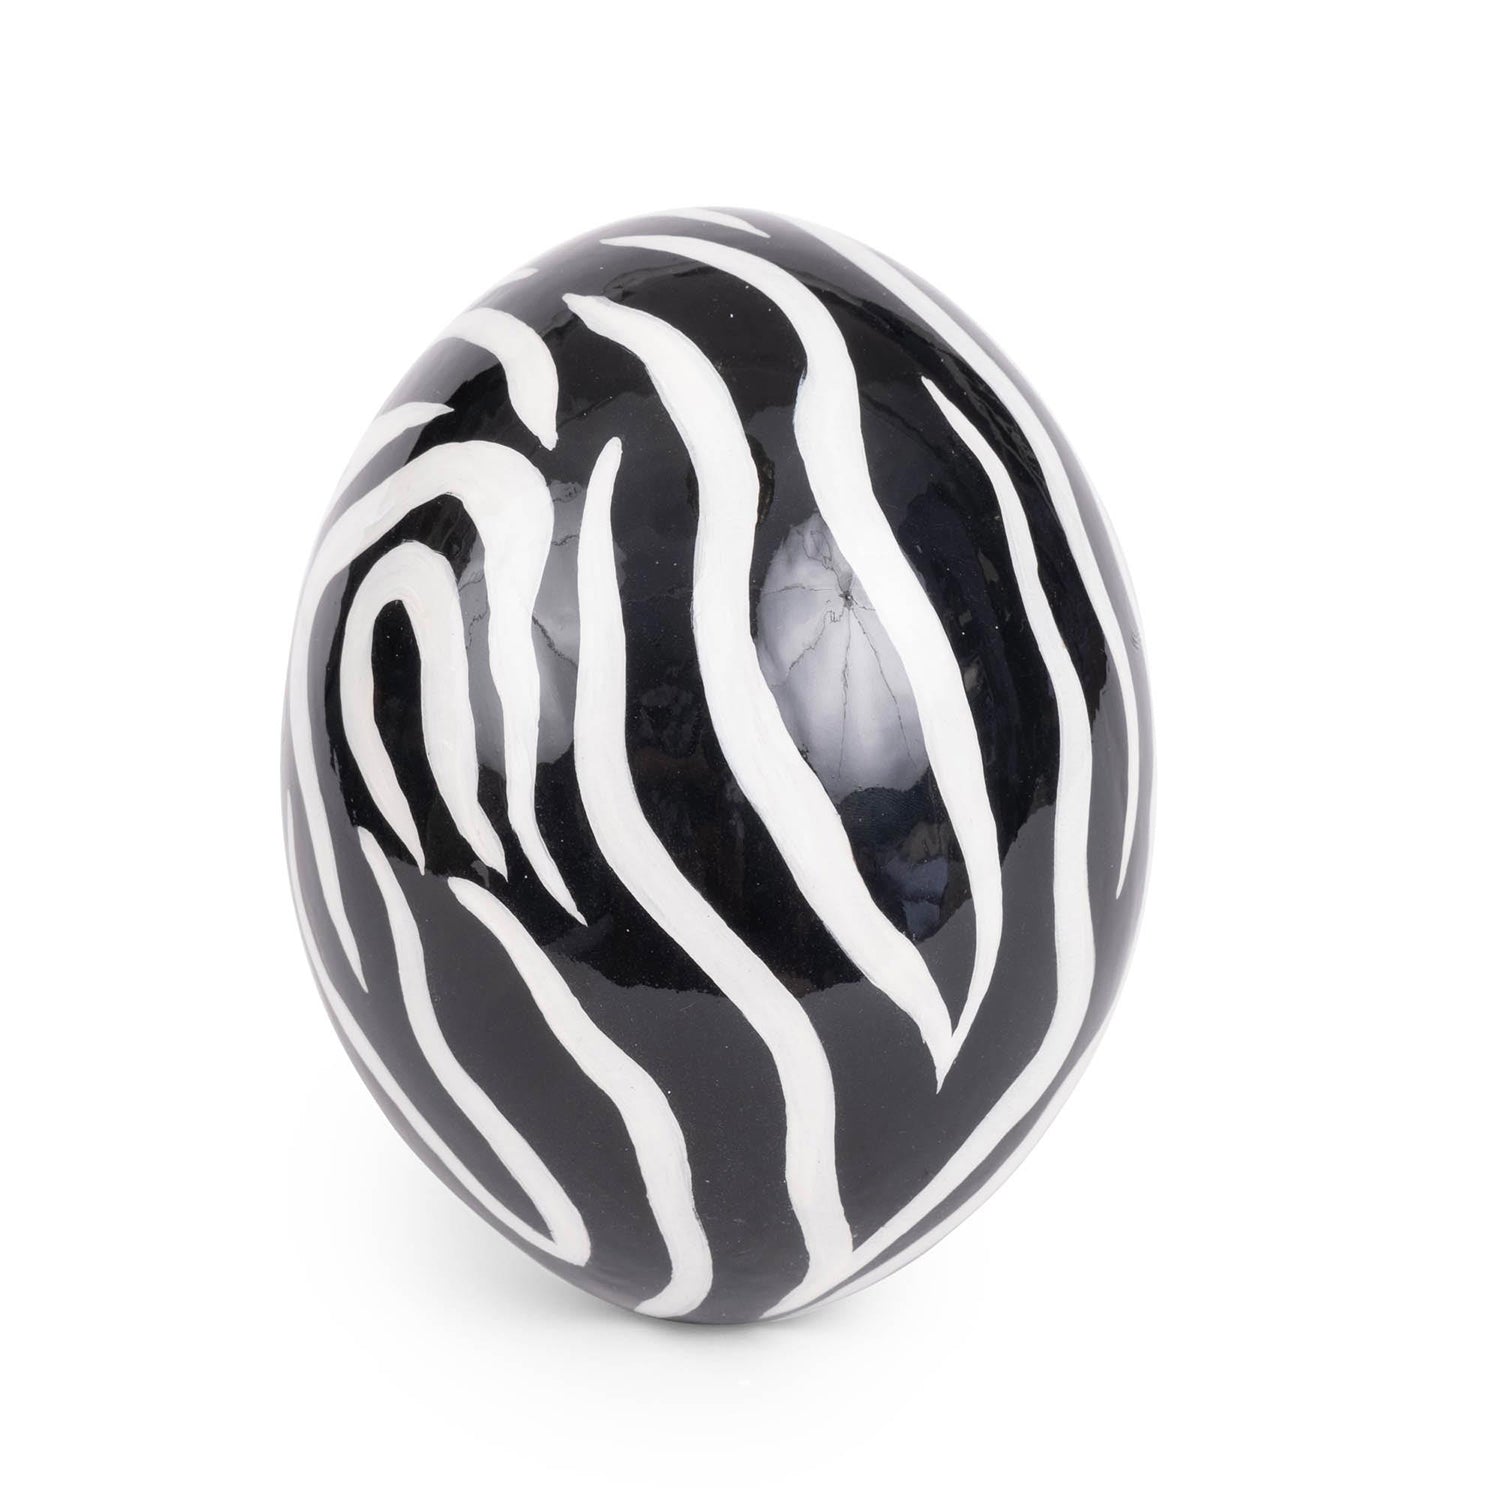 Painted Ostrich Egg - Black & White Zebra Stripe